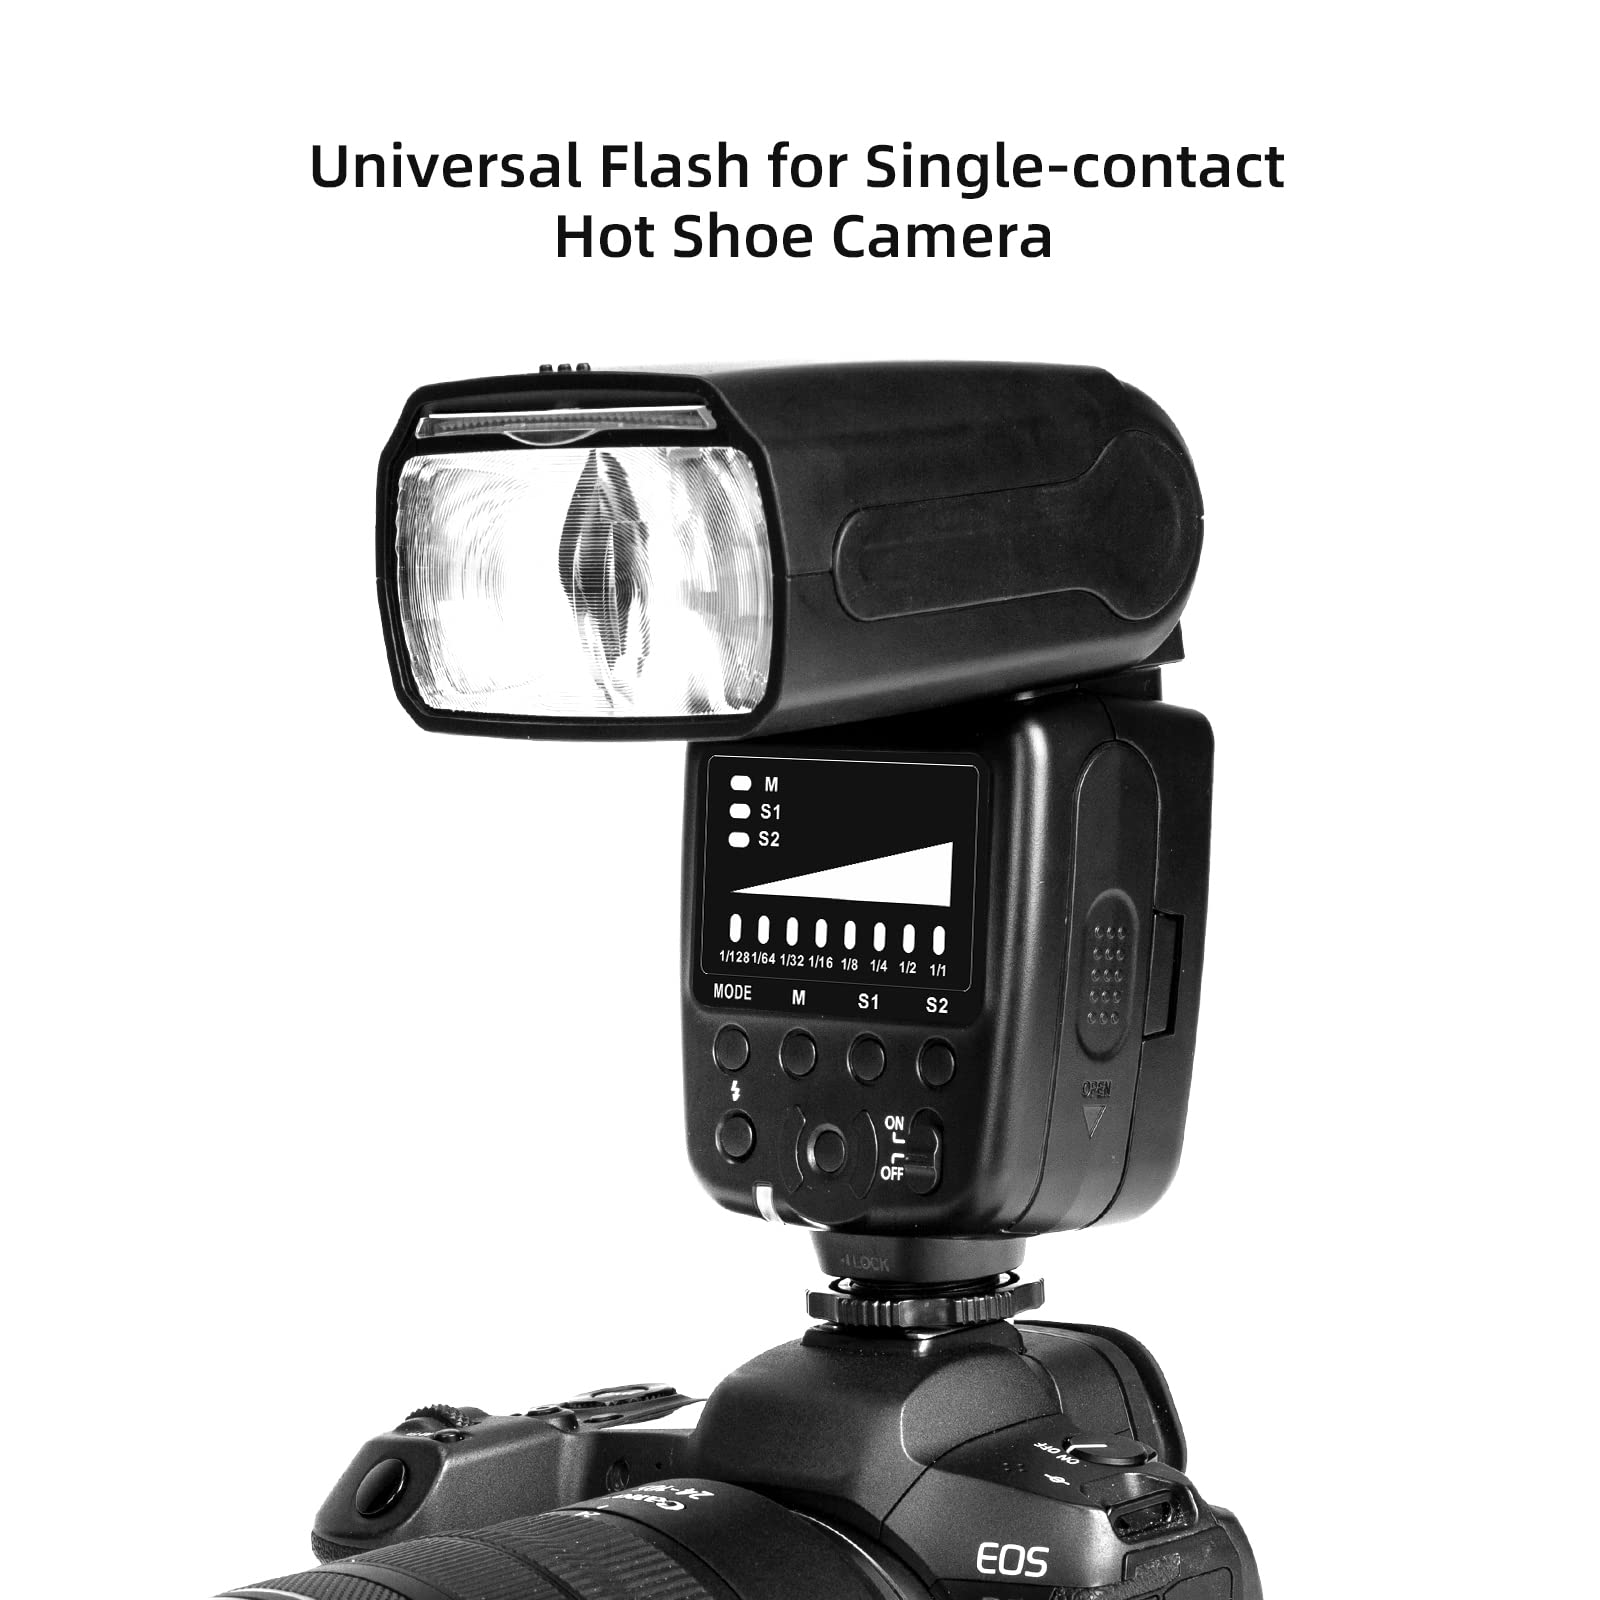 PHOTOOLEX FK300 Camera Flash Speedlite for Canon Nikon Sony Panasonic Olympus Fujifilm Pentax Sigma Minolta Leica and Other SLR Digital Cameras and Digital Cameras with Single Contact Hot Shoe